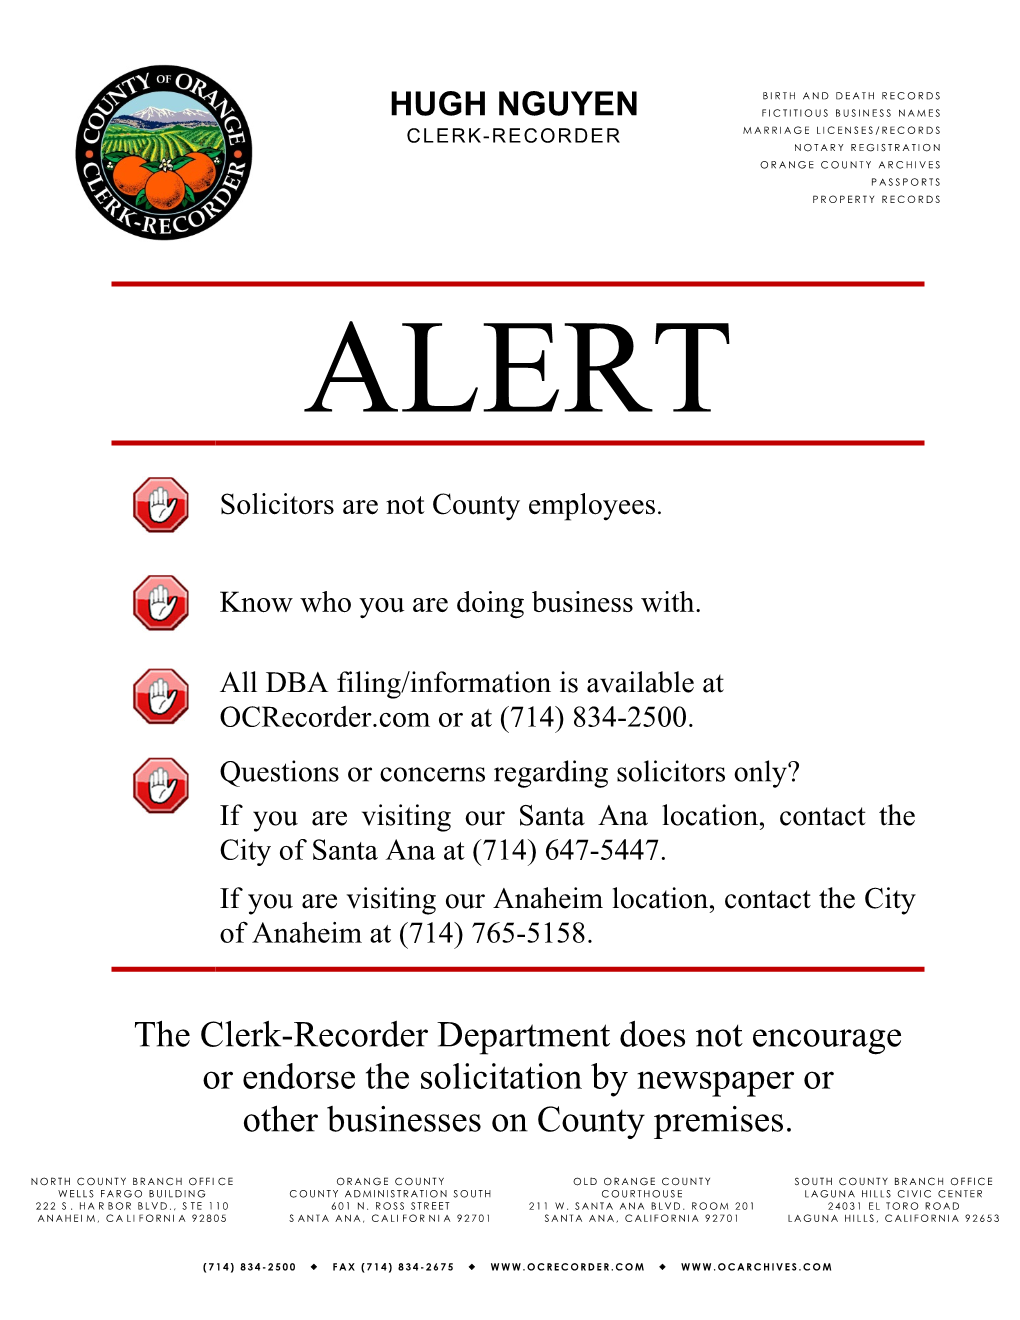 Adjudicated Newspapers in Orange County